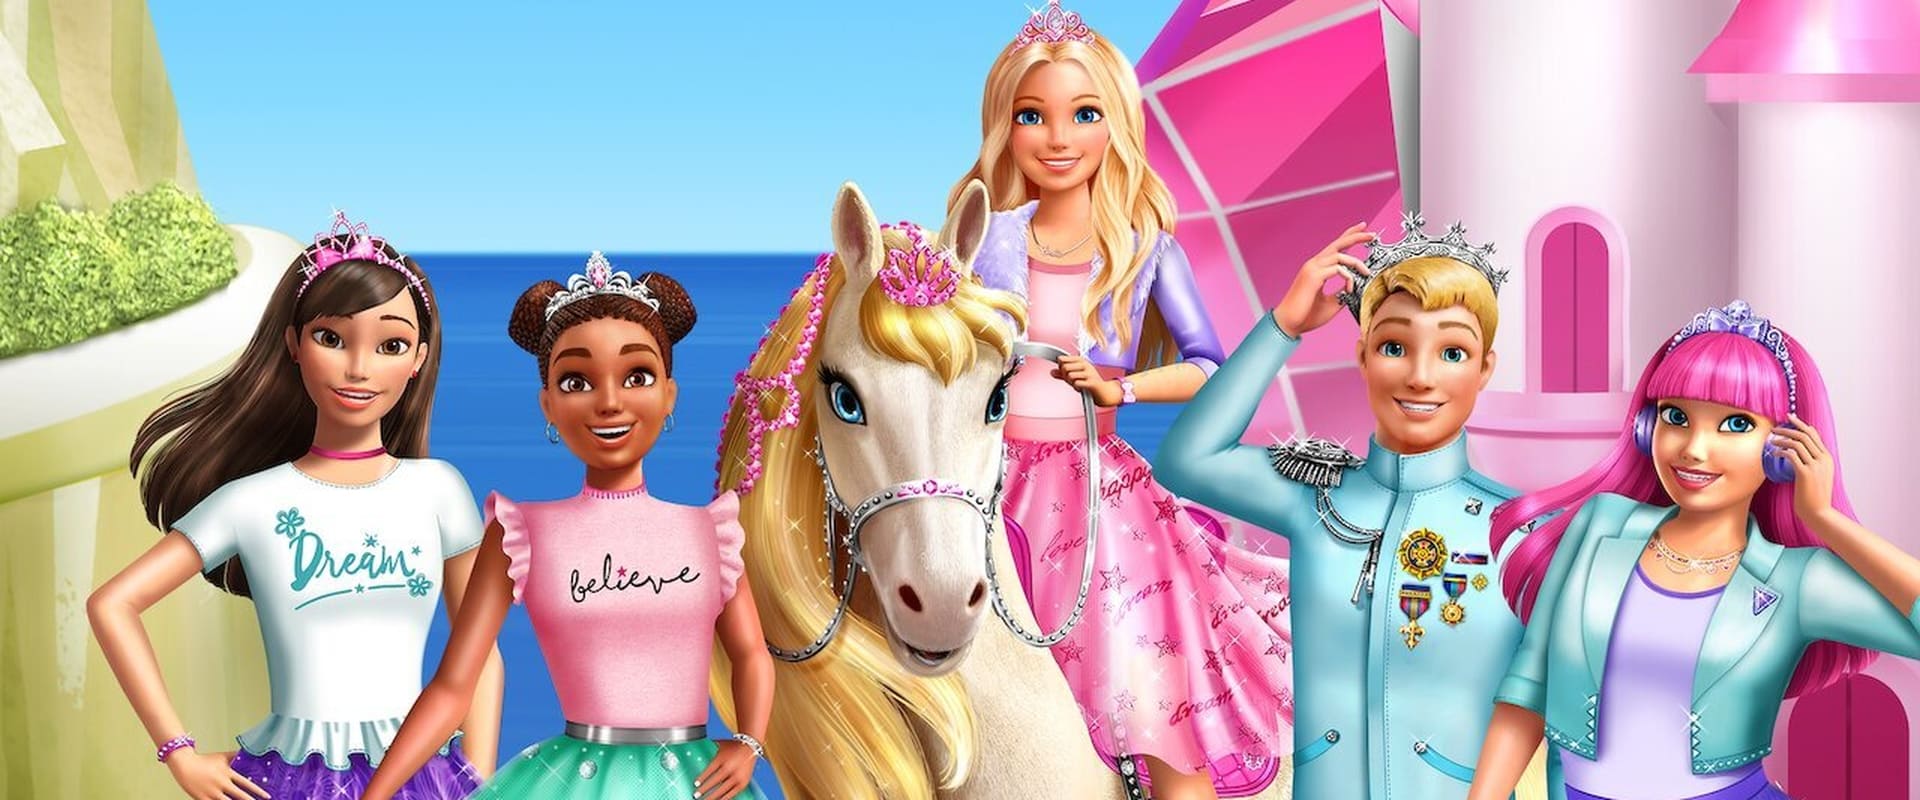 Barbie: Princess Adventure (2020)